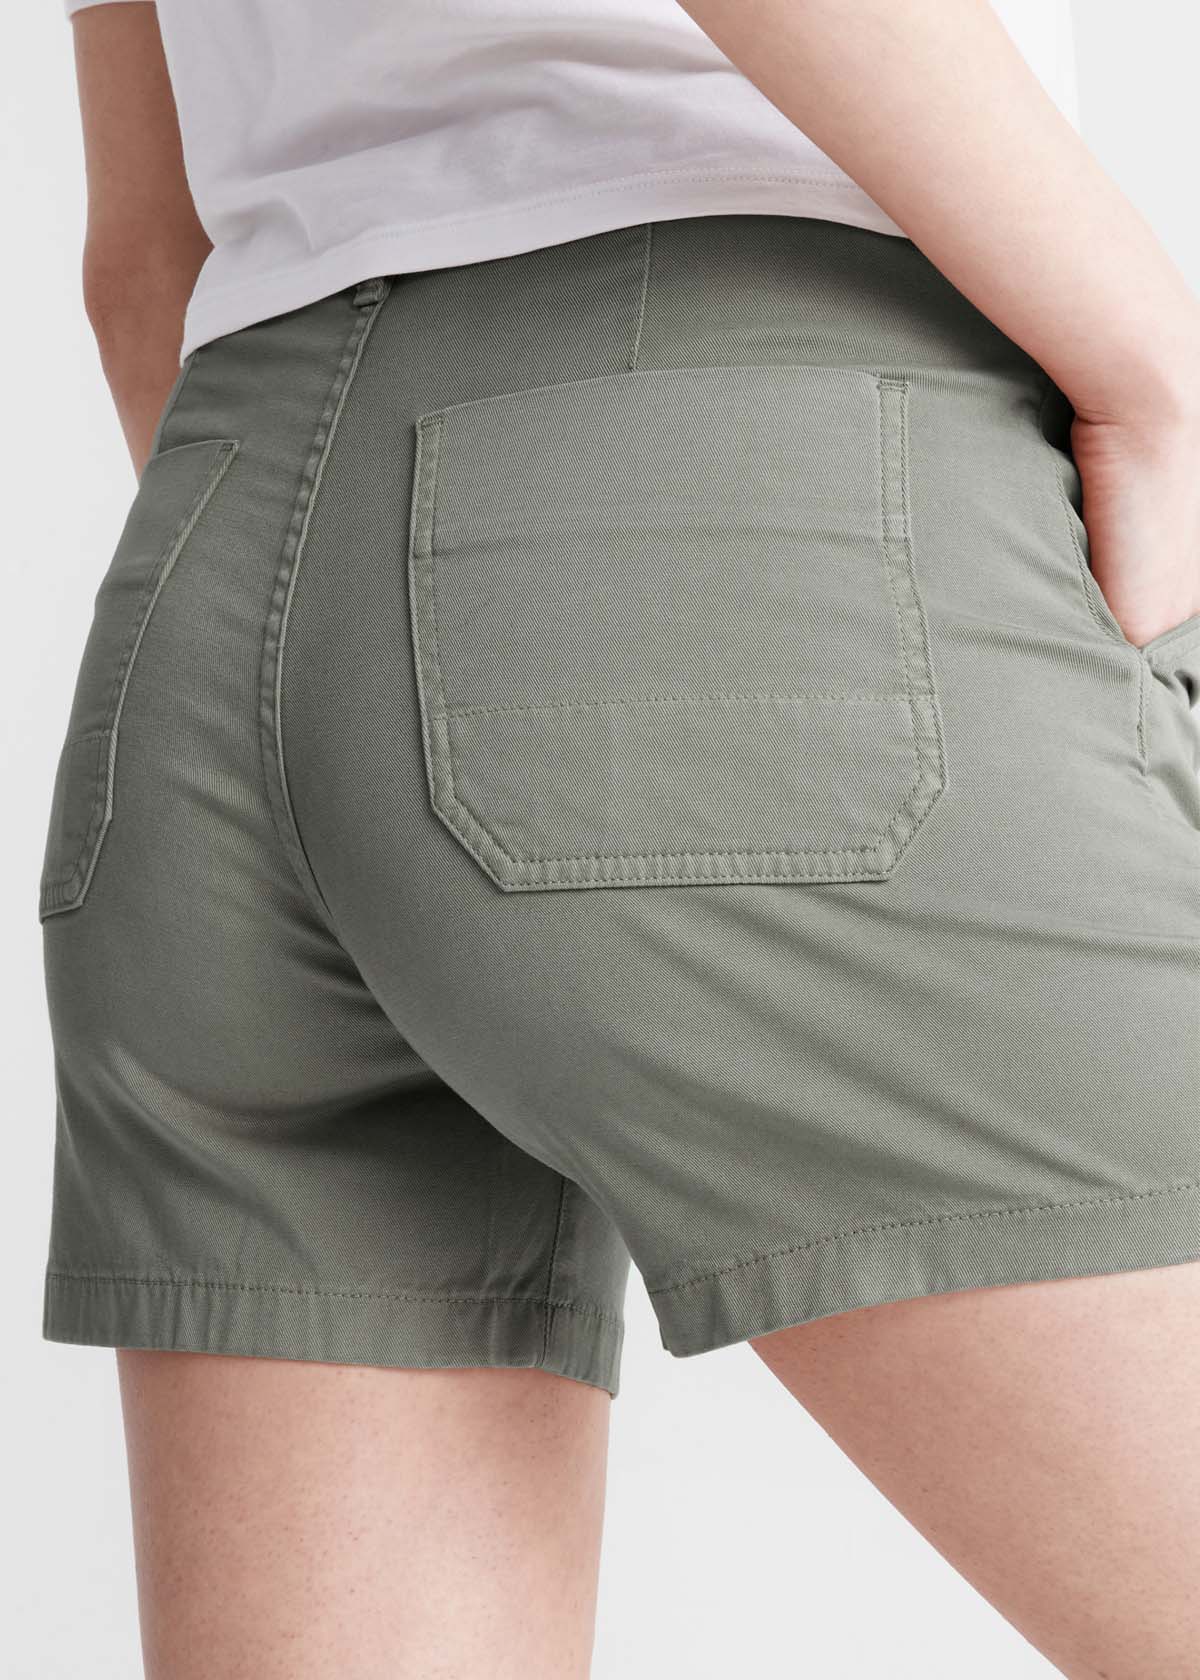 womens green stretch utility shorts back pocket detail